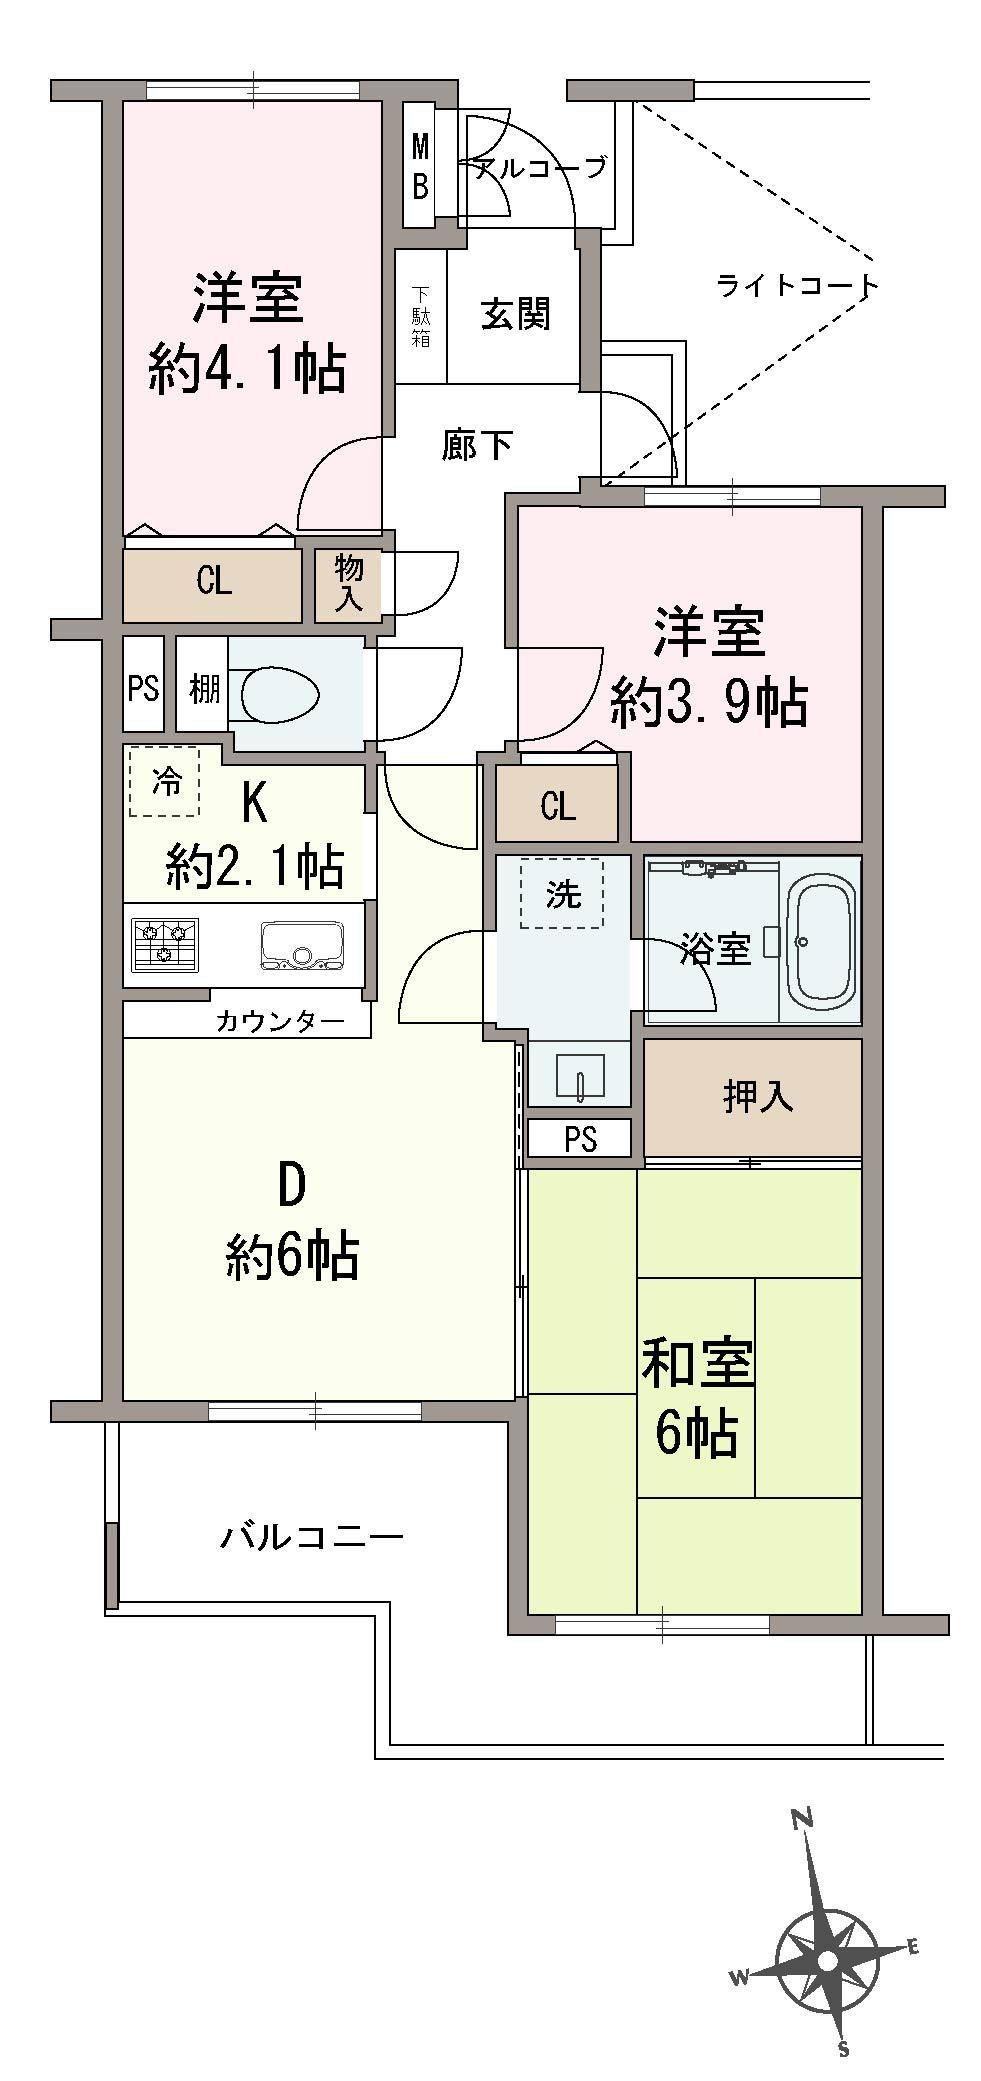 Floor plan. 3DK, Price 14.8 million yen, Occupied area 54.92 sq m , Balcony area 8.45 sq m